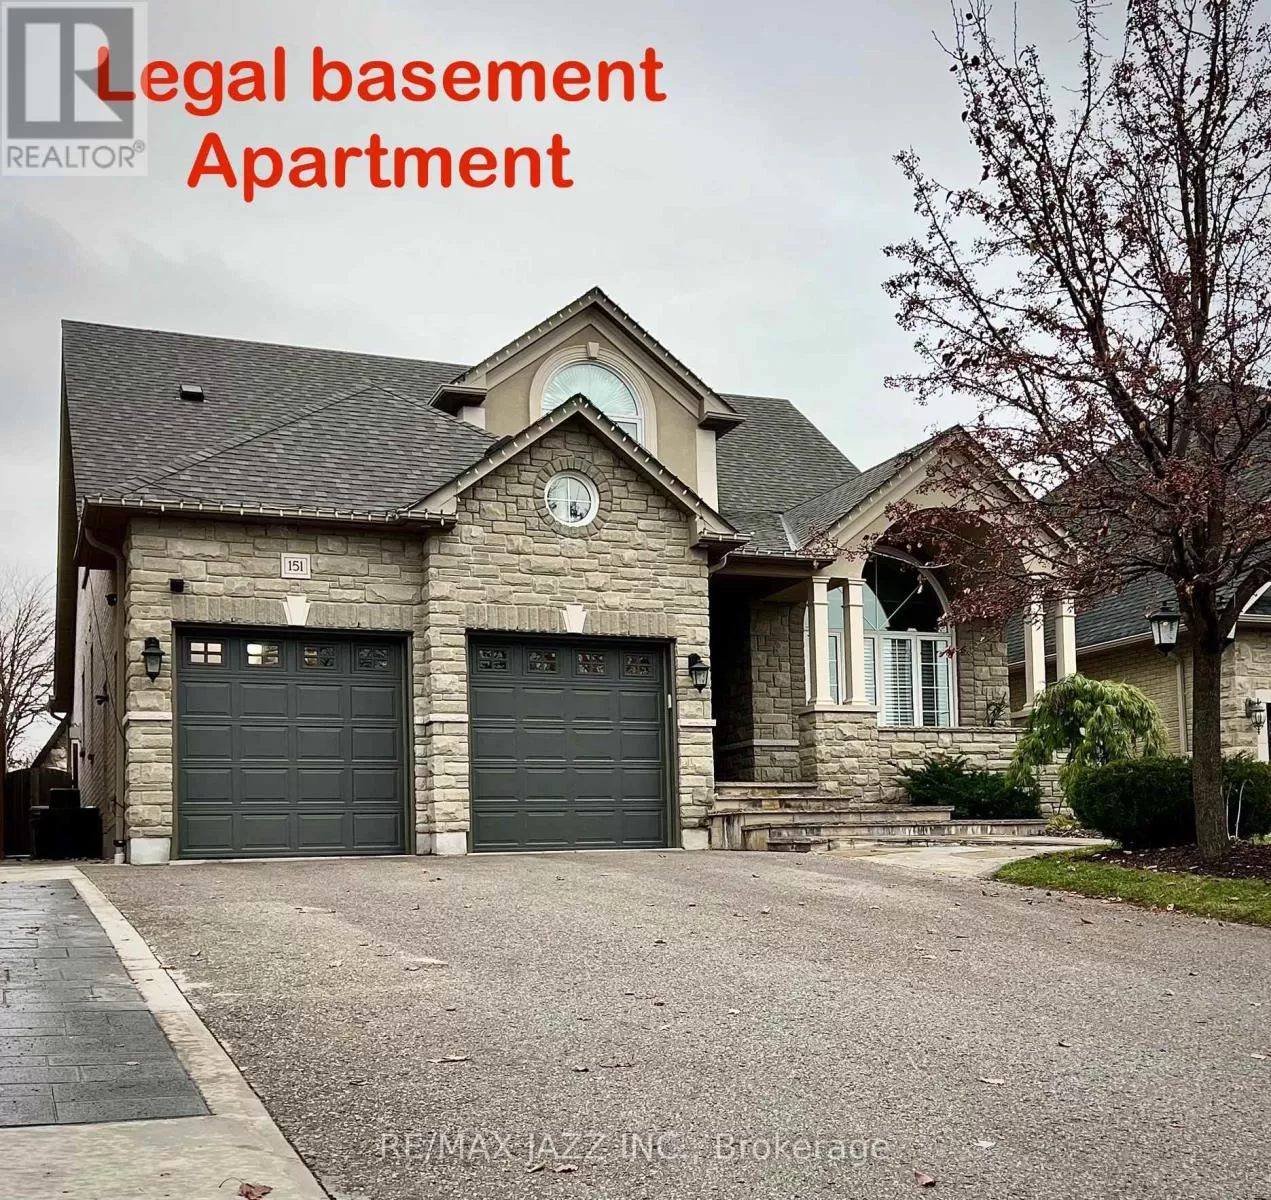 House for rent: 151 Elizabeth St, Oshawa, Ontario L1J 8L9